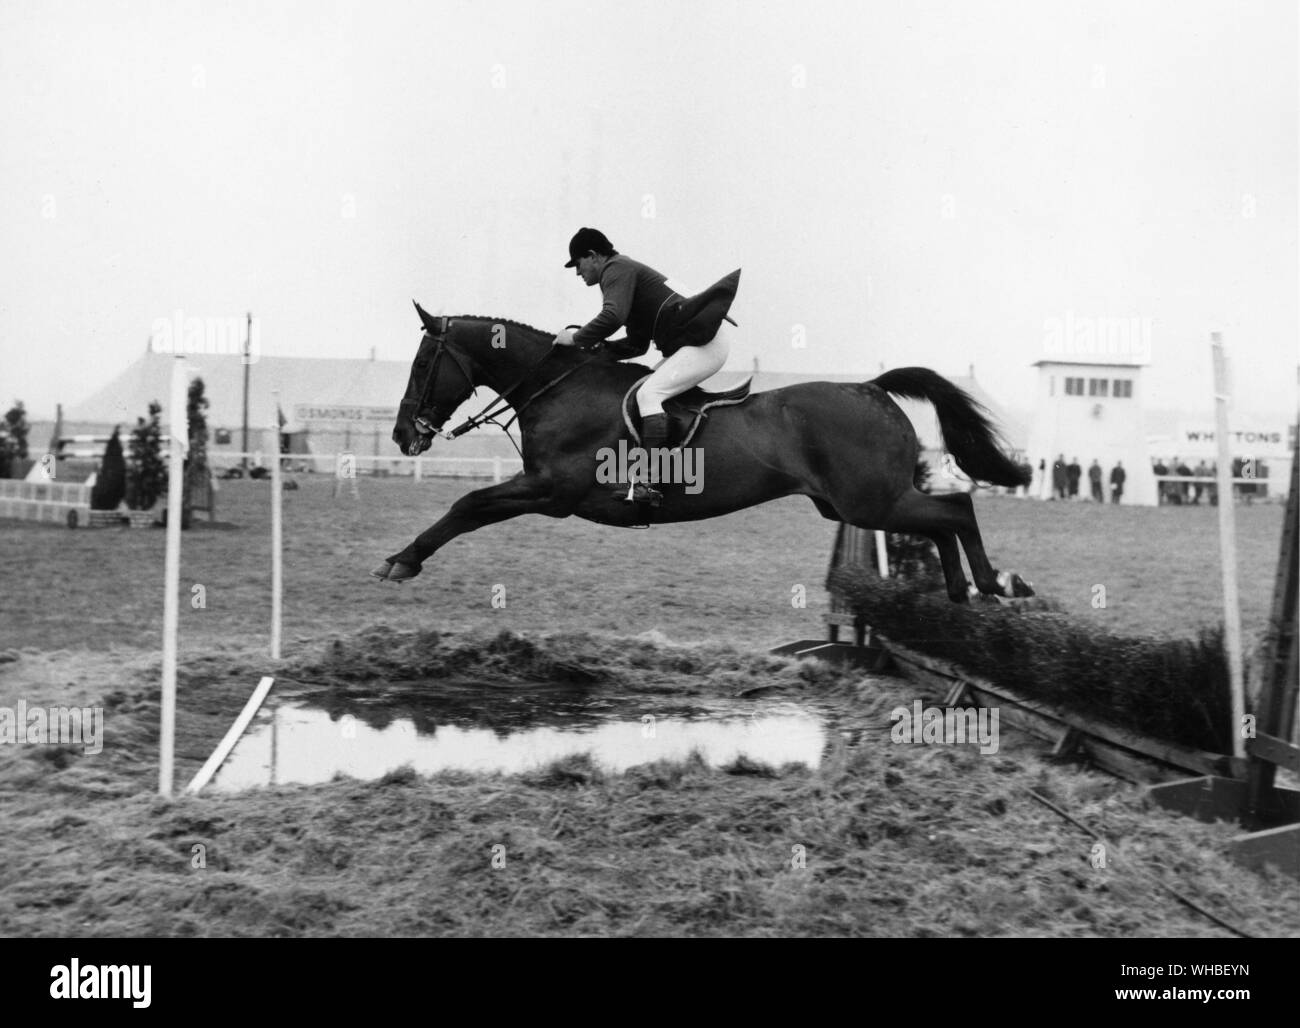 Harvey Smith riding the horse Madison Time Stock Photo - Alamy